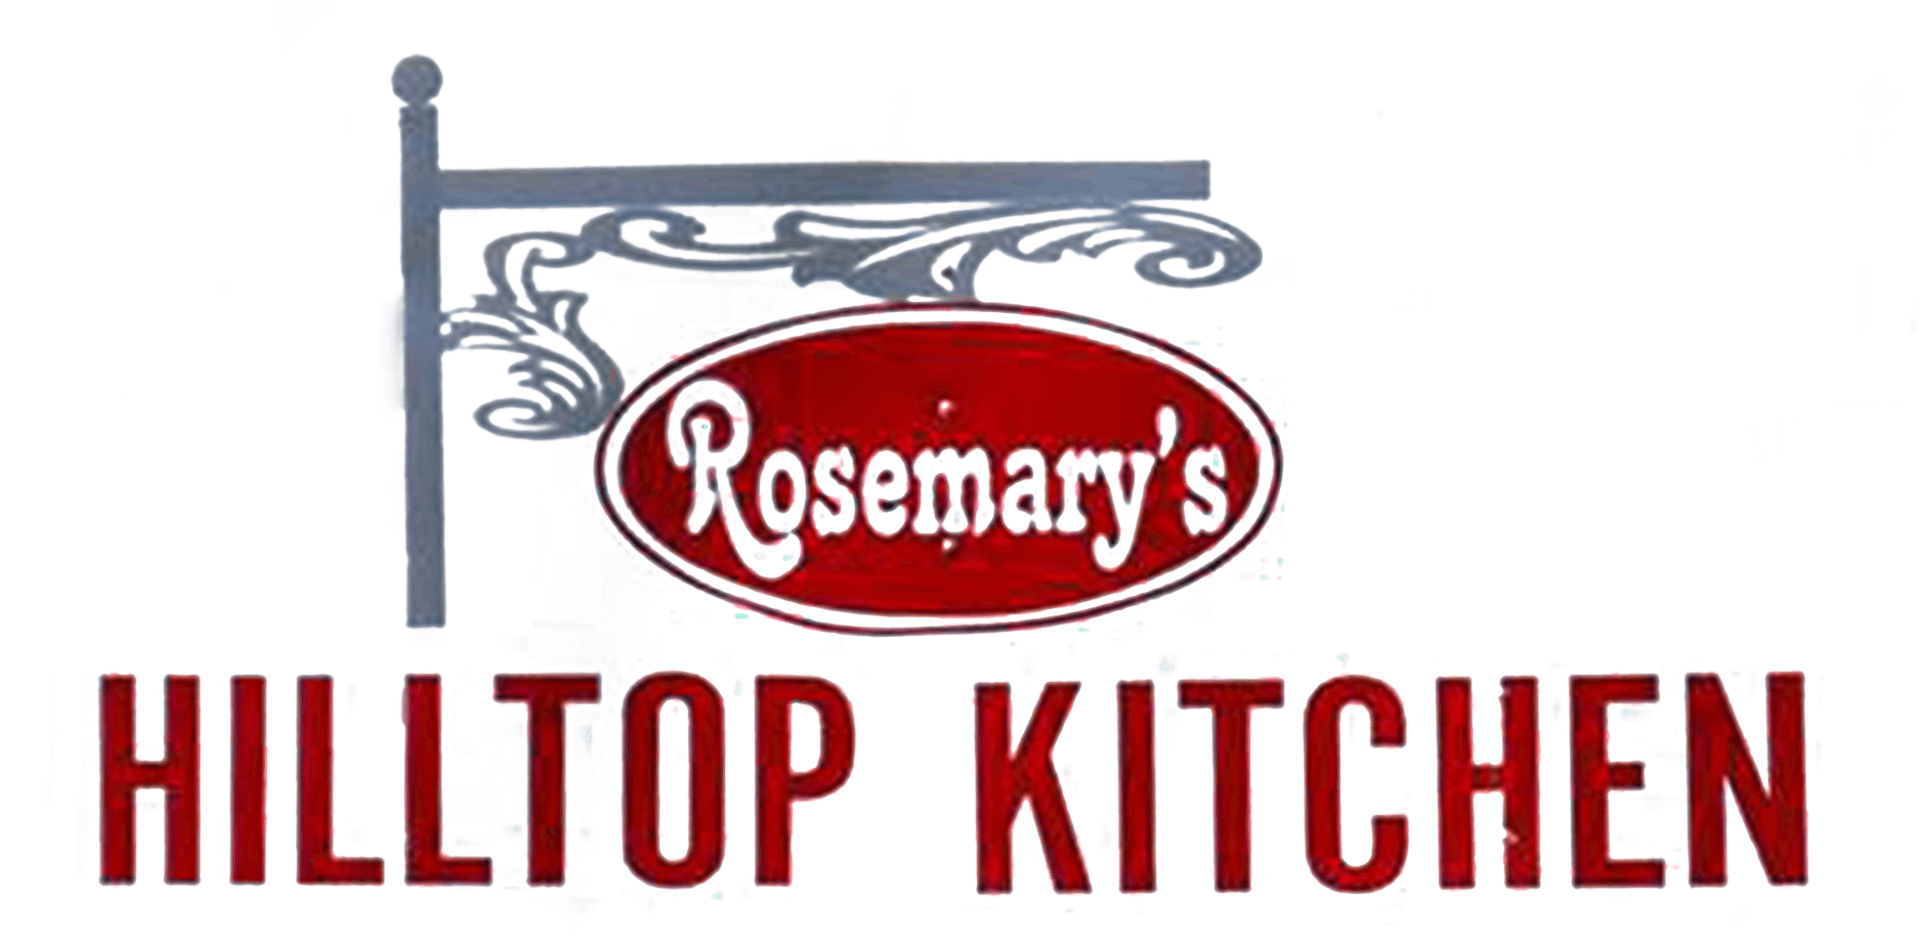 Rosemary's Hilltop Kitchen